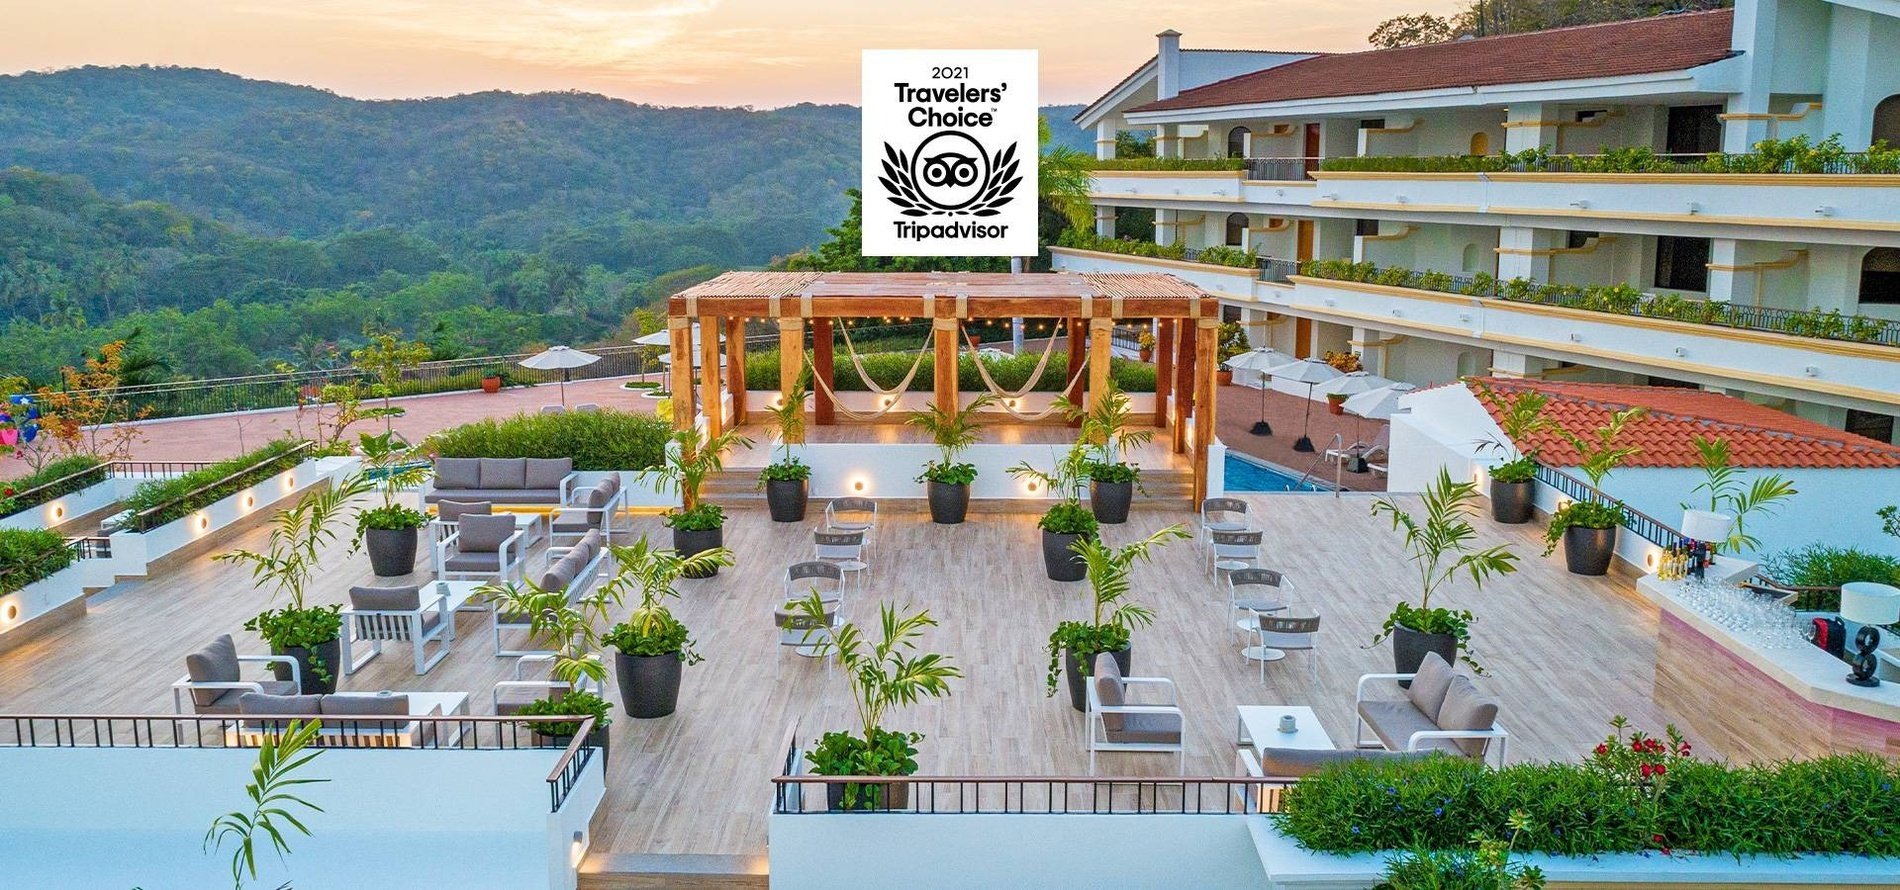 Travelers Choice 2021 Award by TripAdvisor to the Park Royal Beach Huatulco Hotel in Mexico